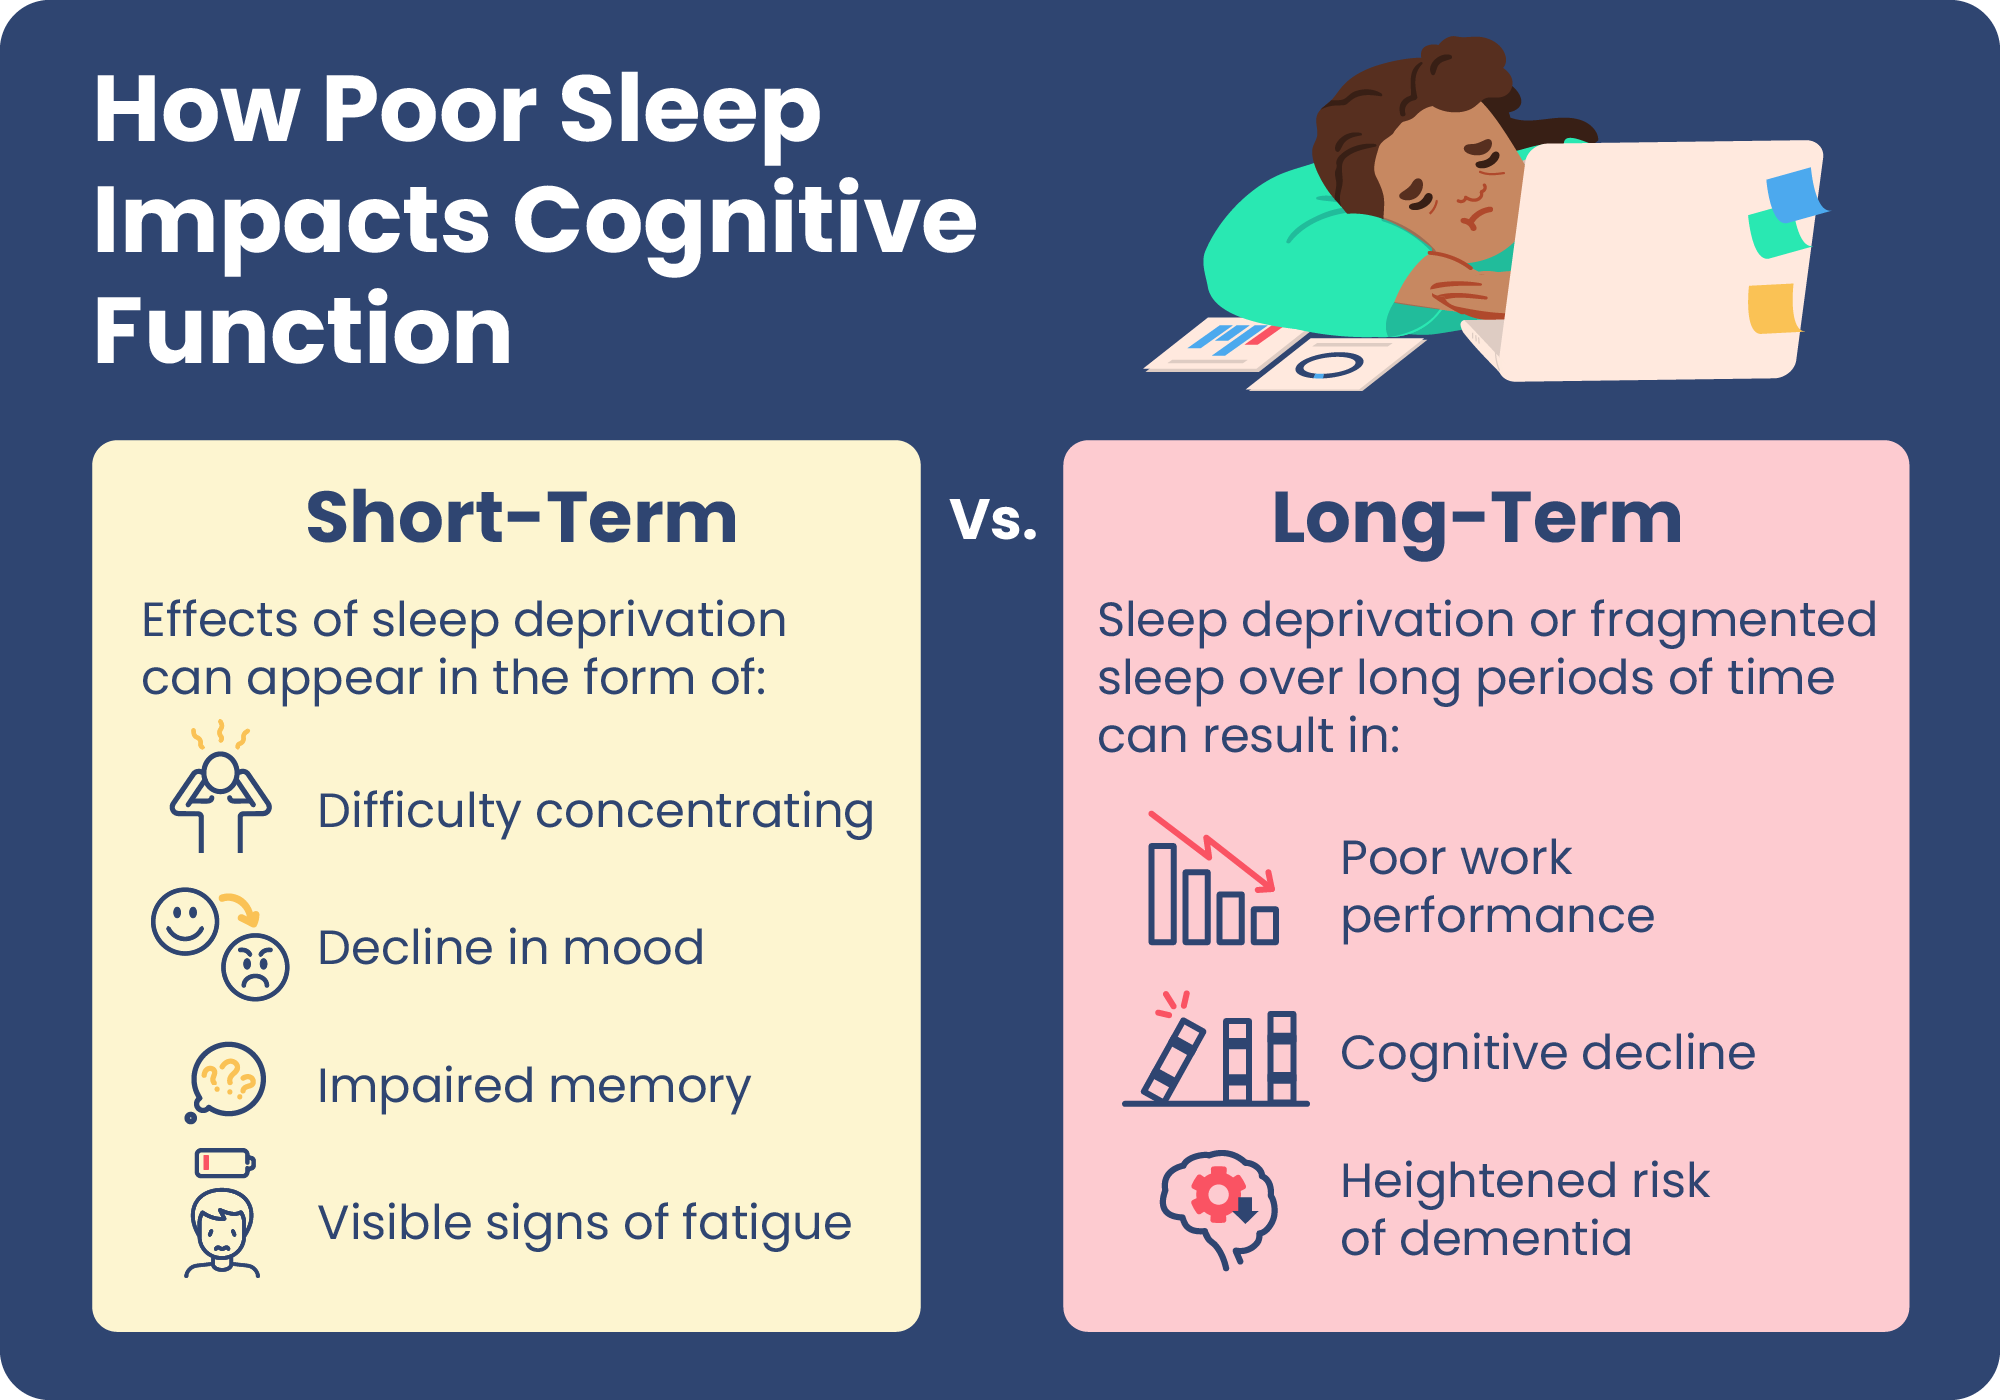 Can irregular sleep affect cognitive function?